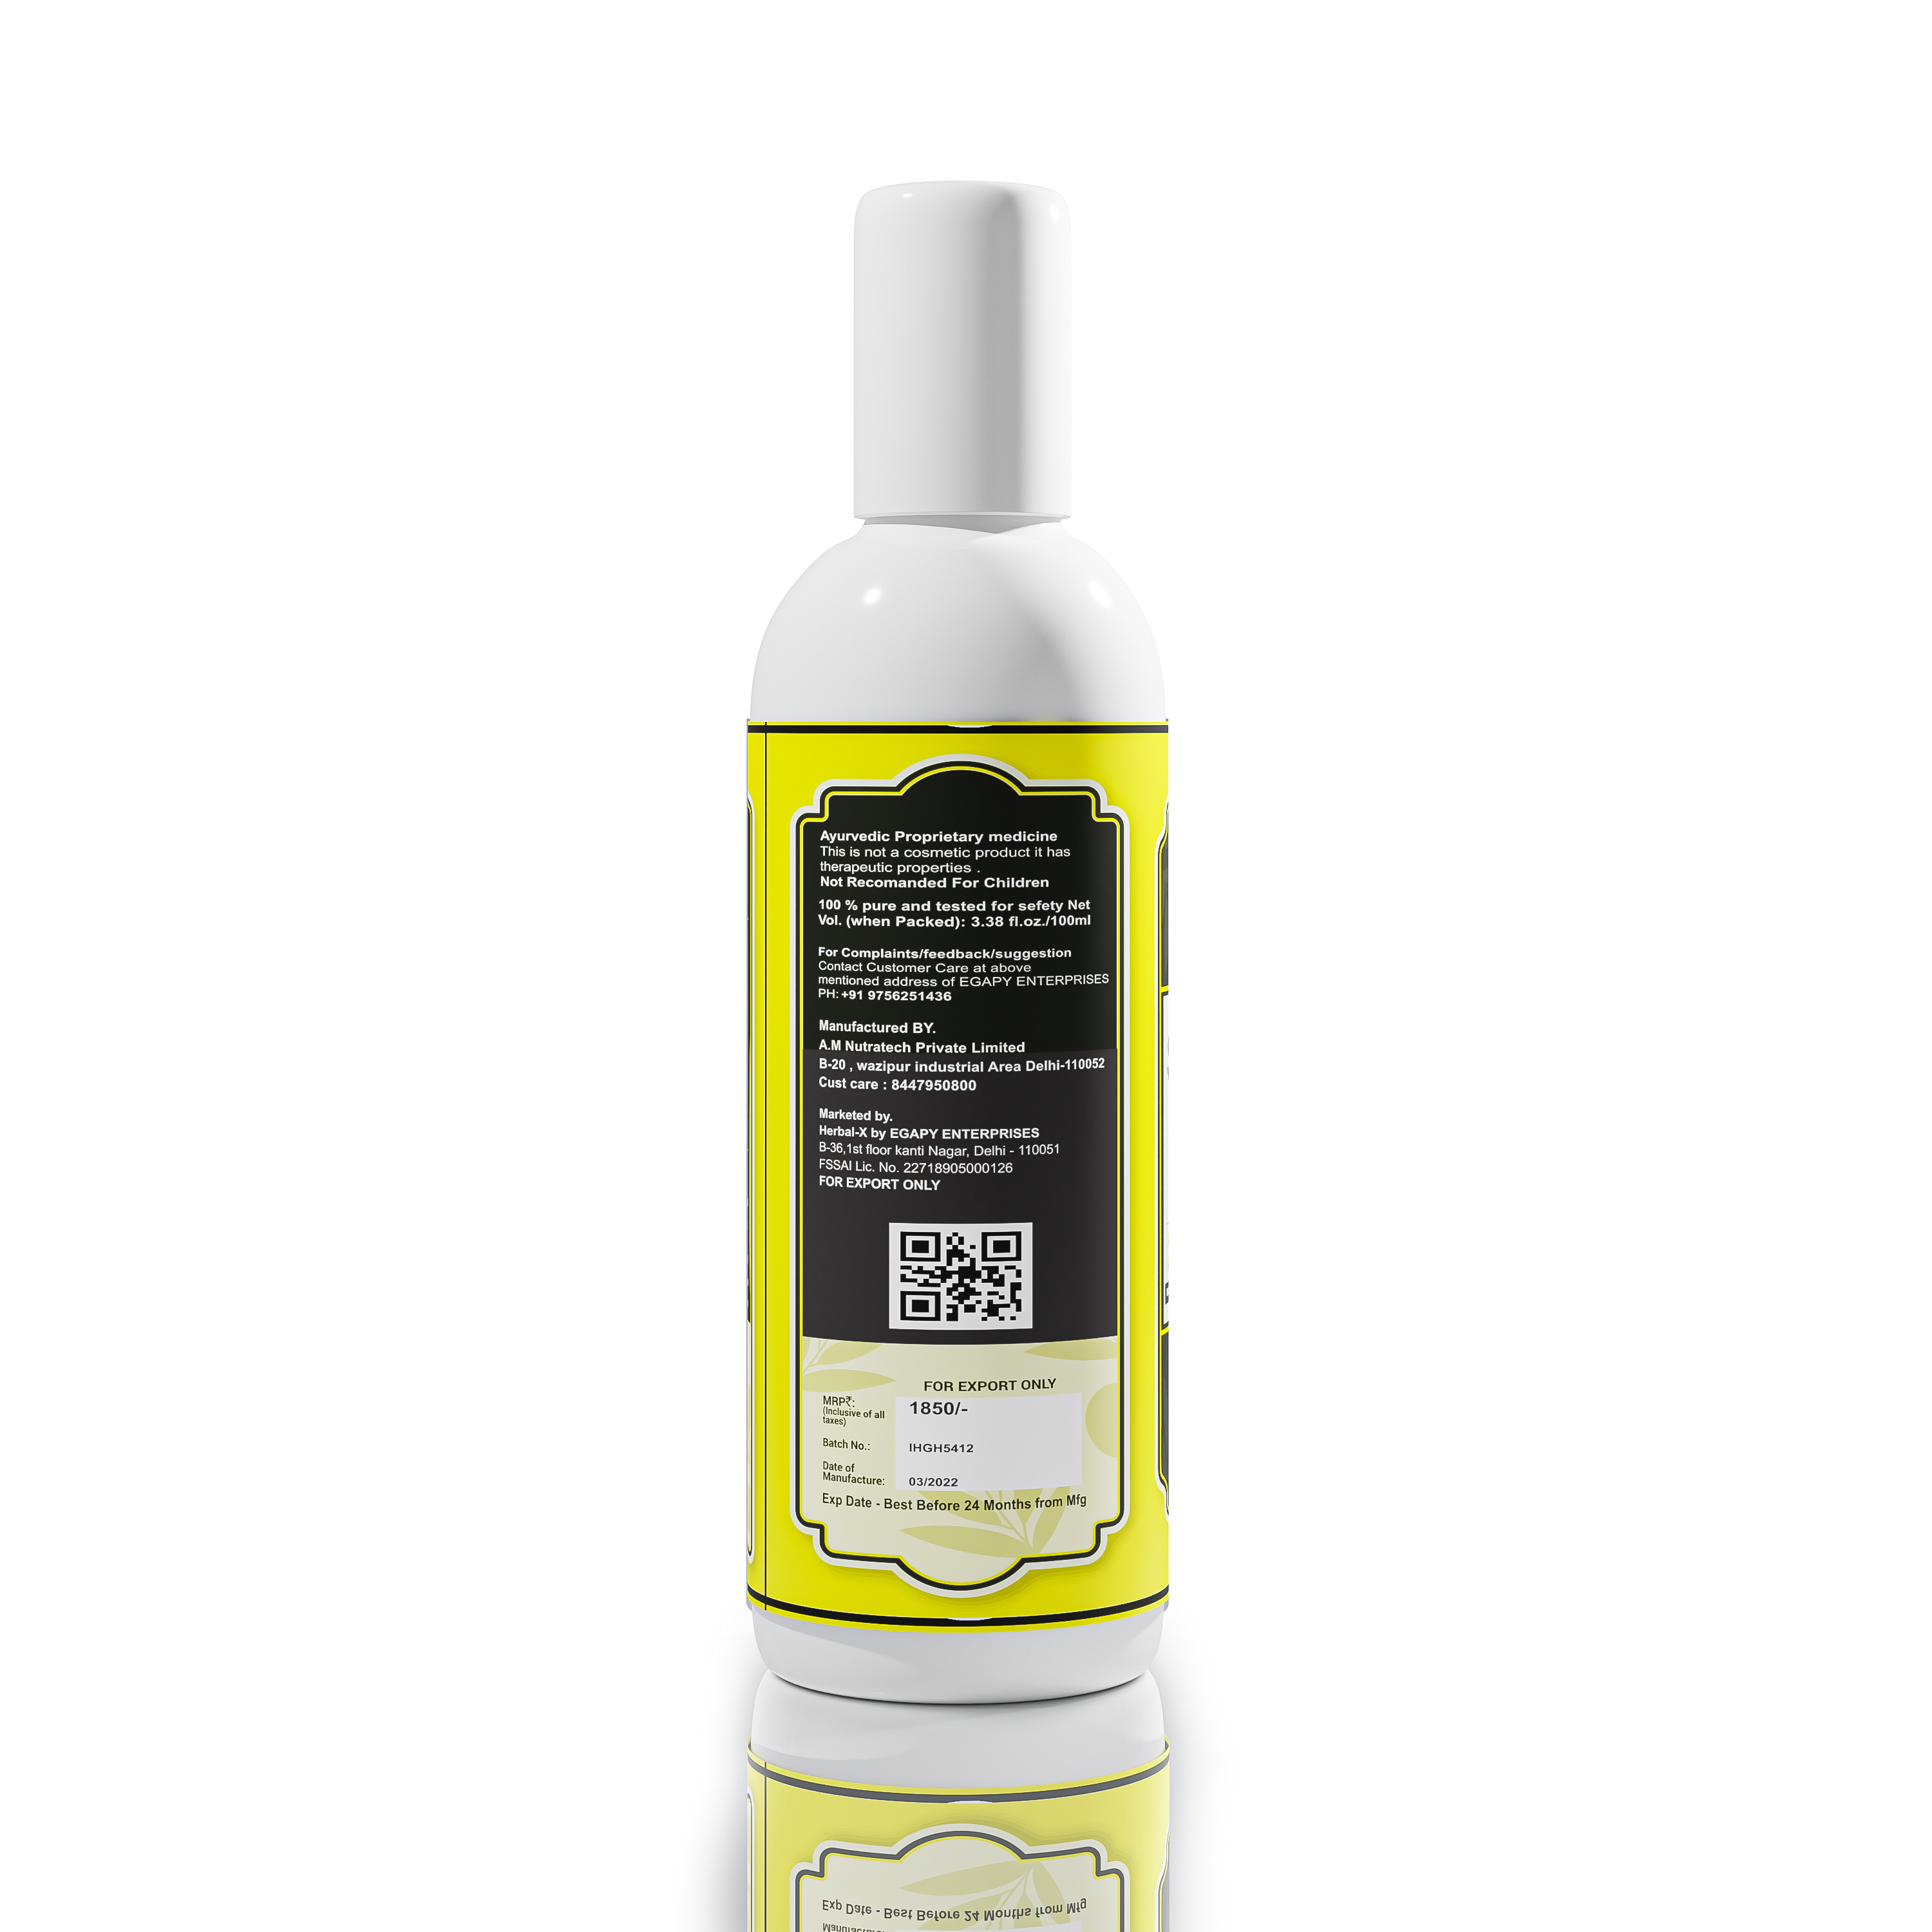 Herbal Pharmacy SLICK Good Herbs Onion Hair Oil (Hair Repair & Nourishment ) (100 ml)